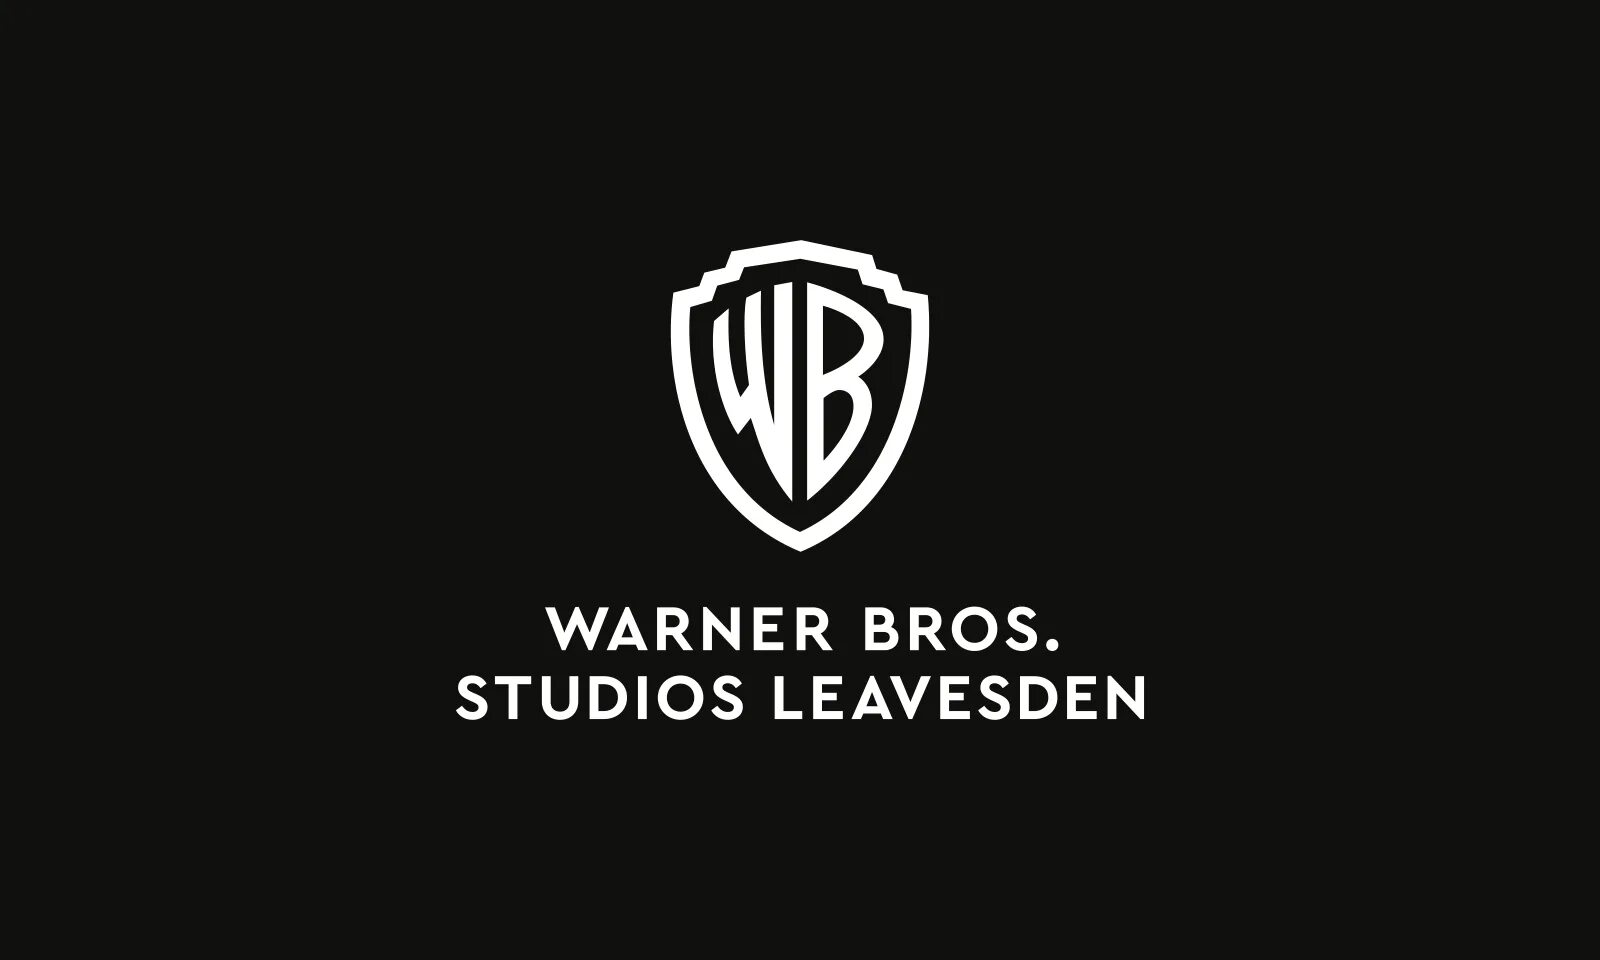 Варнер. Warner brothers 1923. Warner brothers 1927. Логотип ворнер БРОС 1925. Ворнер бразерс 20 век.